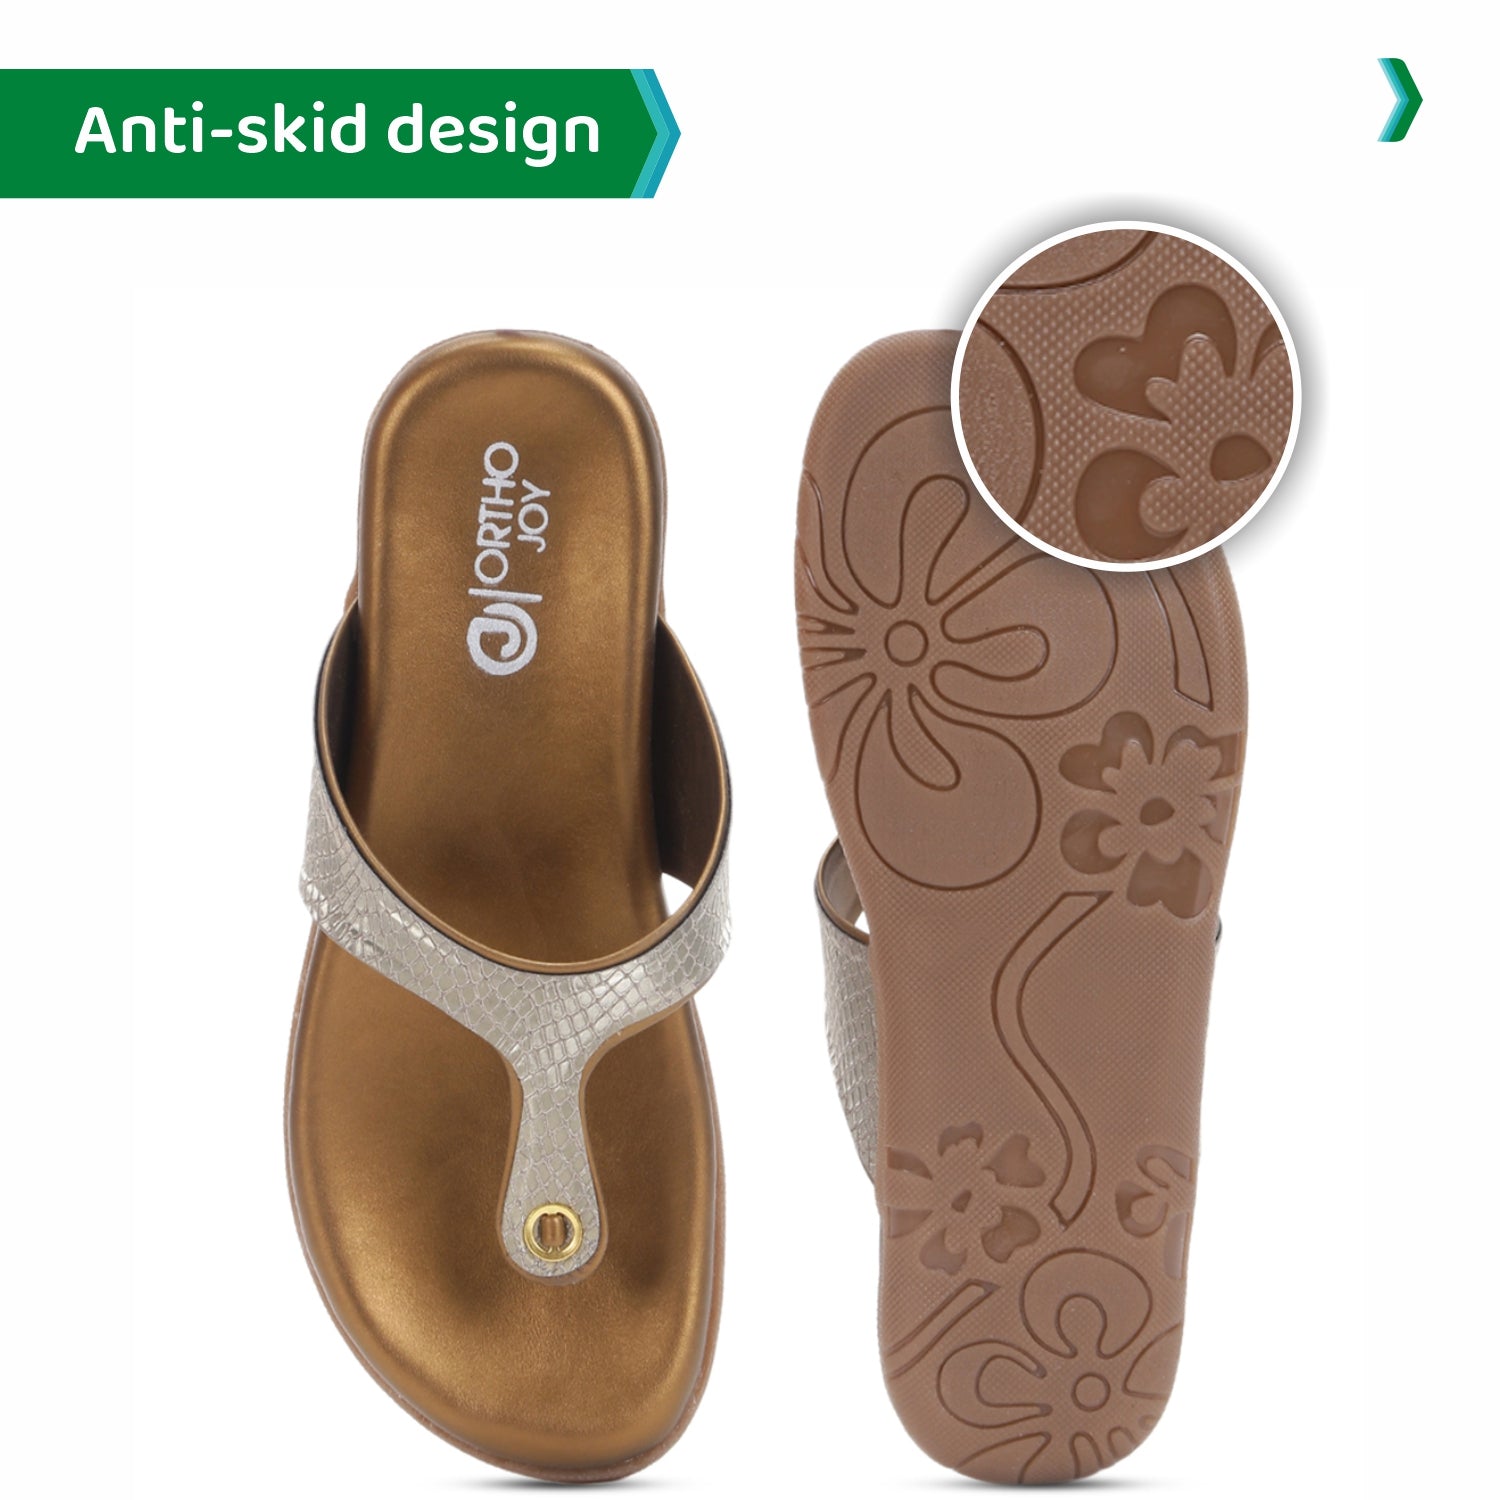 ORTHO JOY Fancy Comfortable sandals for women stylish